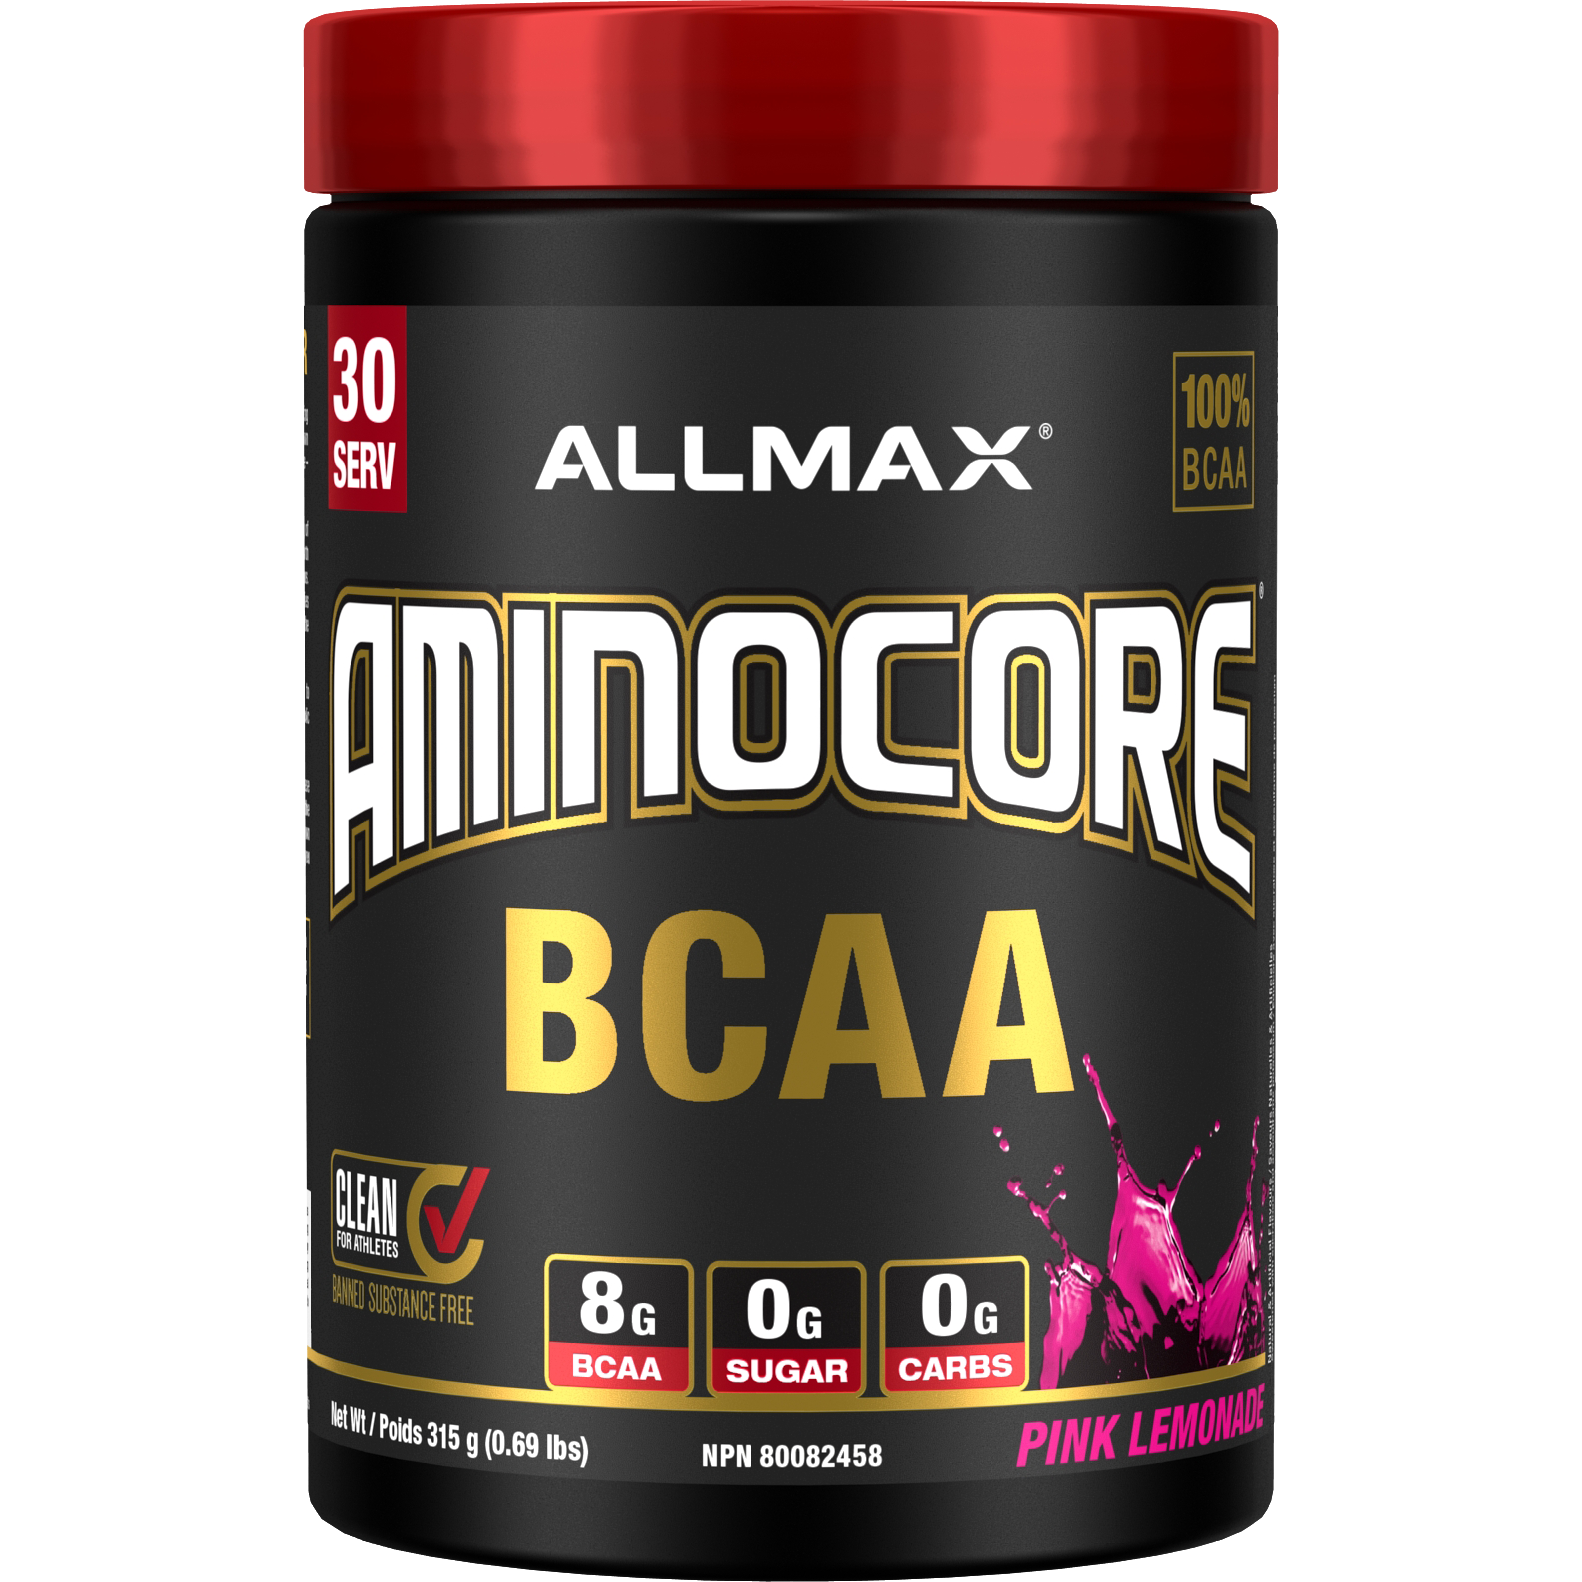 NEW Allmax Aminocore (30 servings) BCAAs and Amino Acids Pink Lemonade Allmax Nutrition